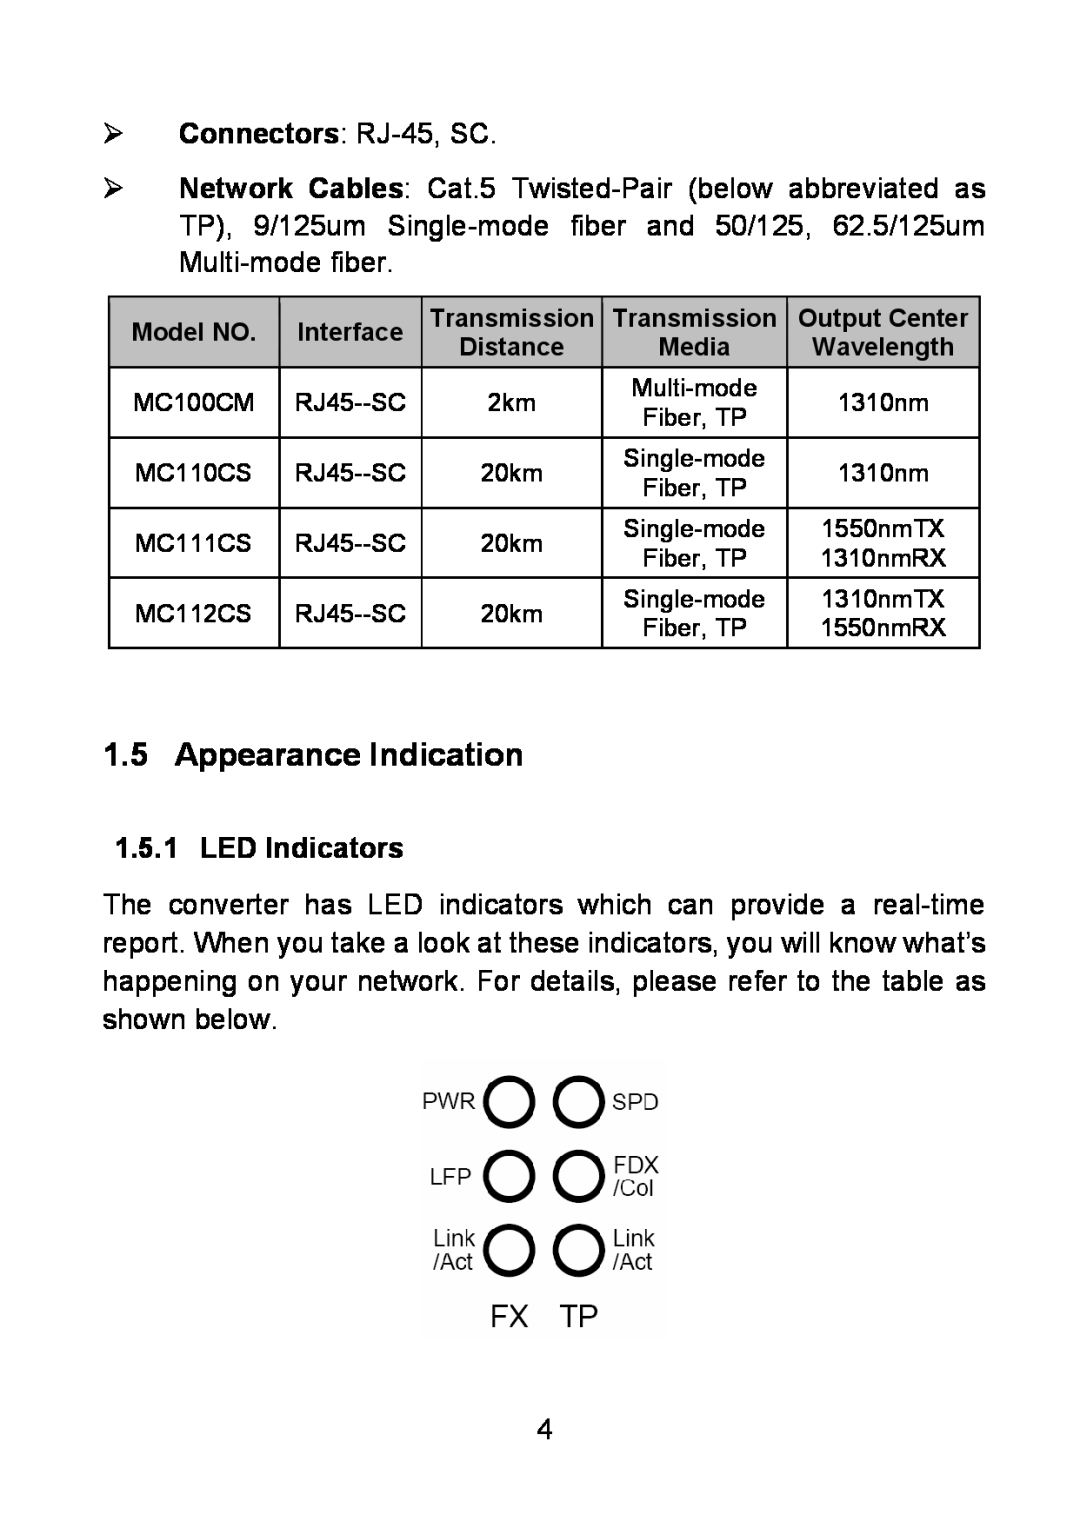 TP-Link MC112CS, MC100CM, MC111CS manual Appearance Indication, LED Indicators 